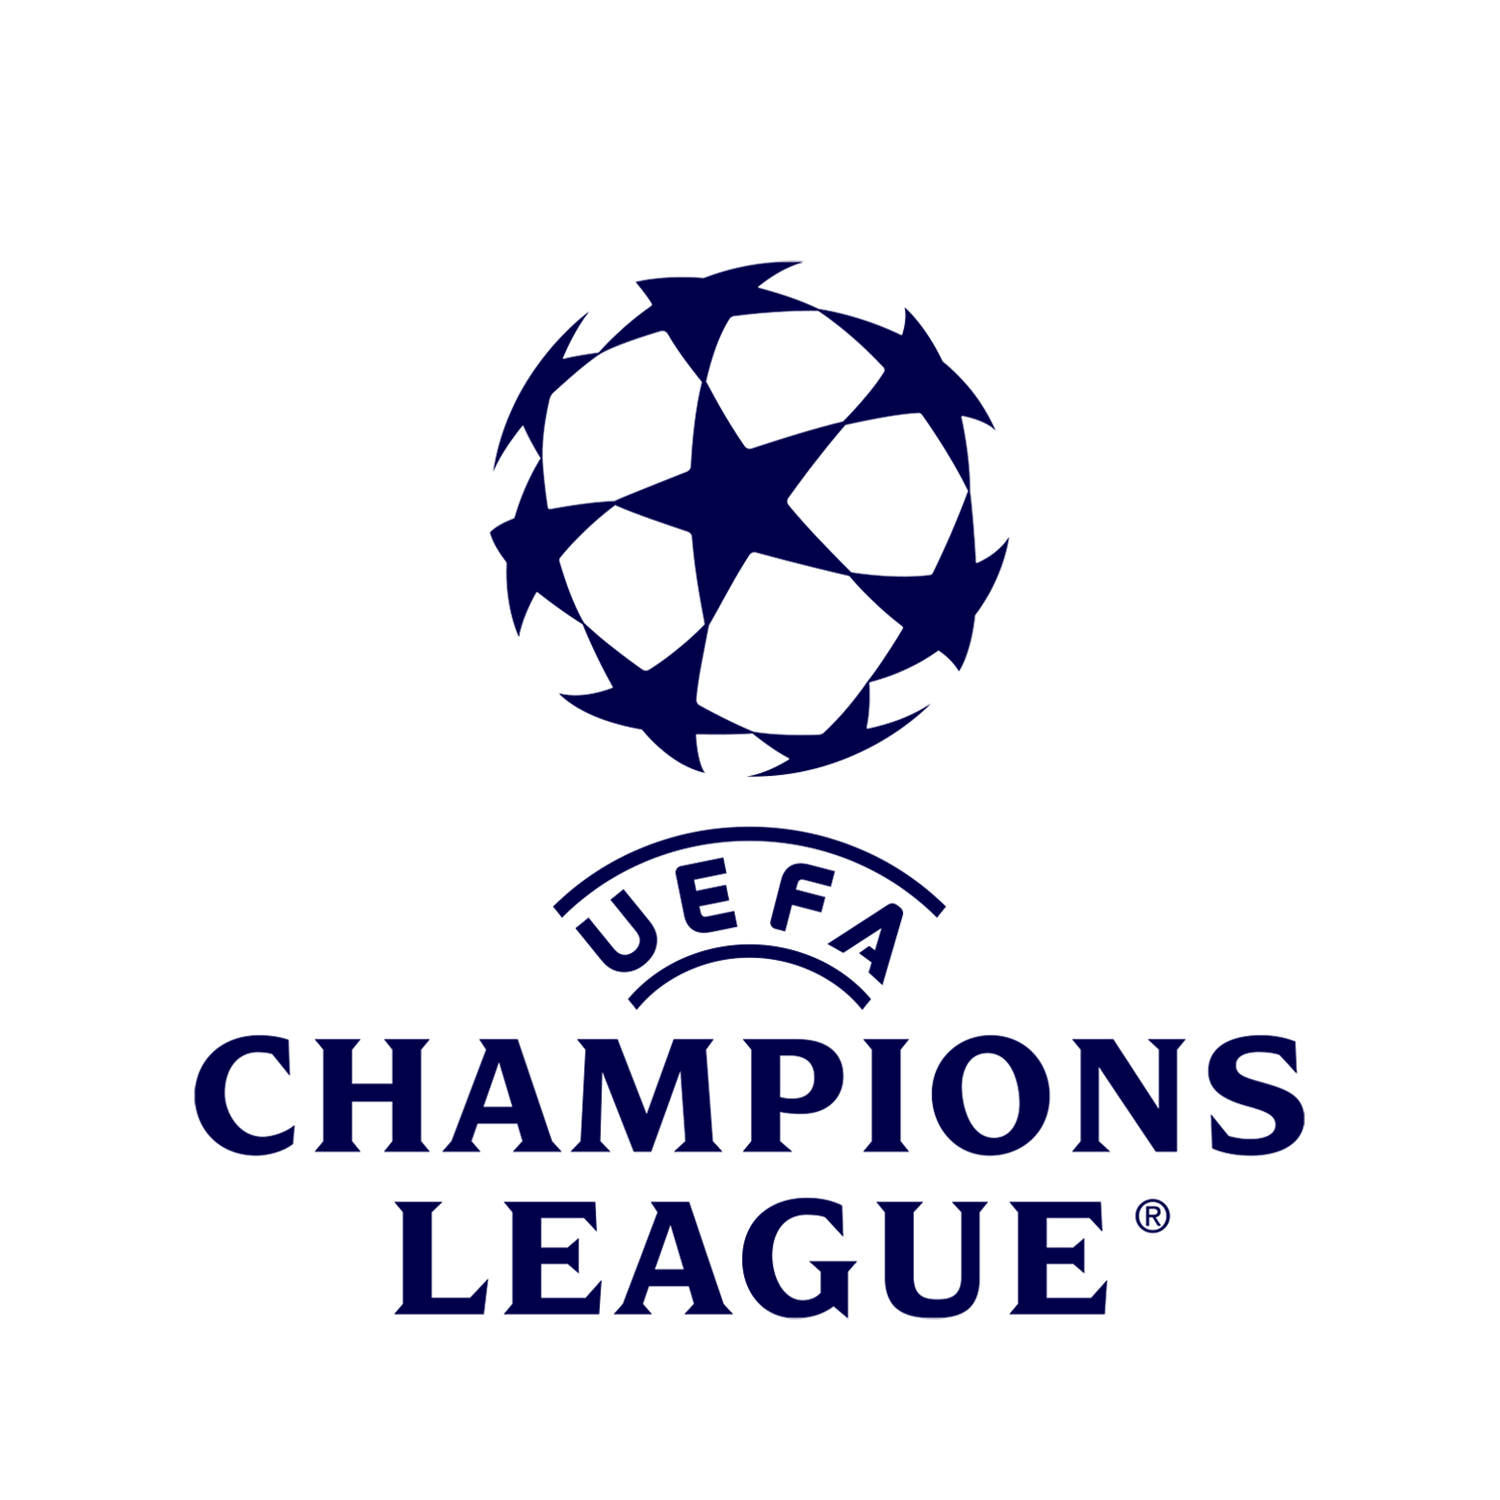 UEFA Champions League Apparel